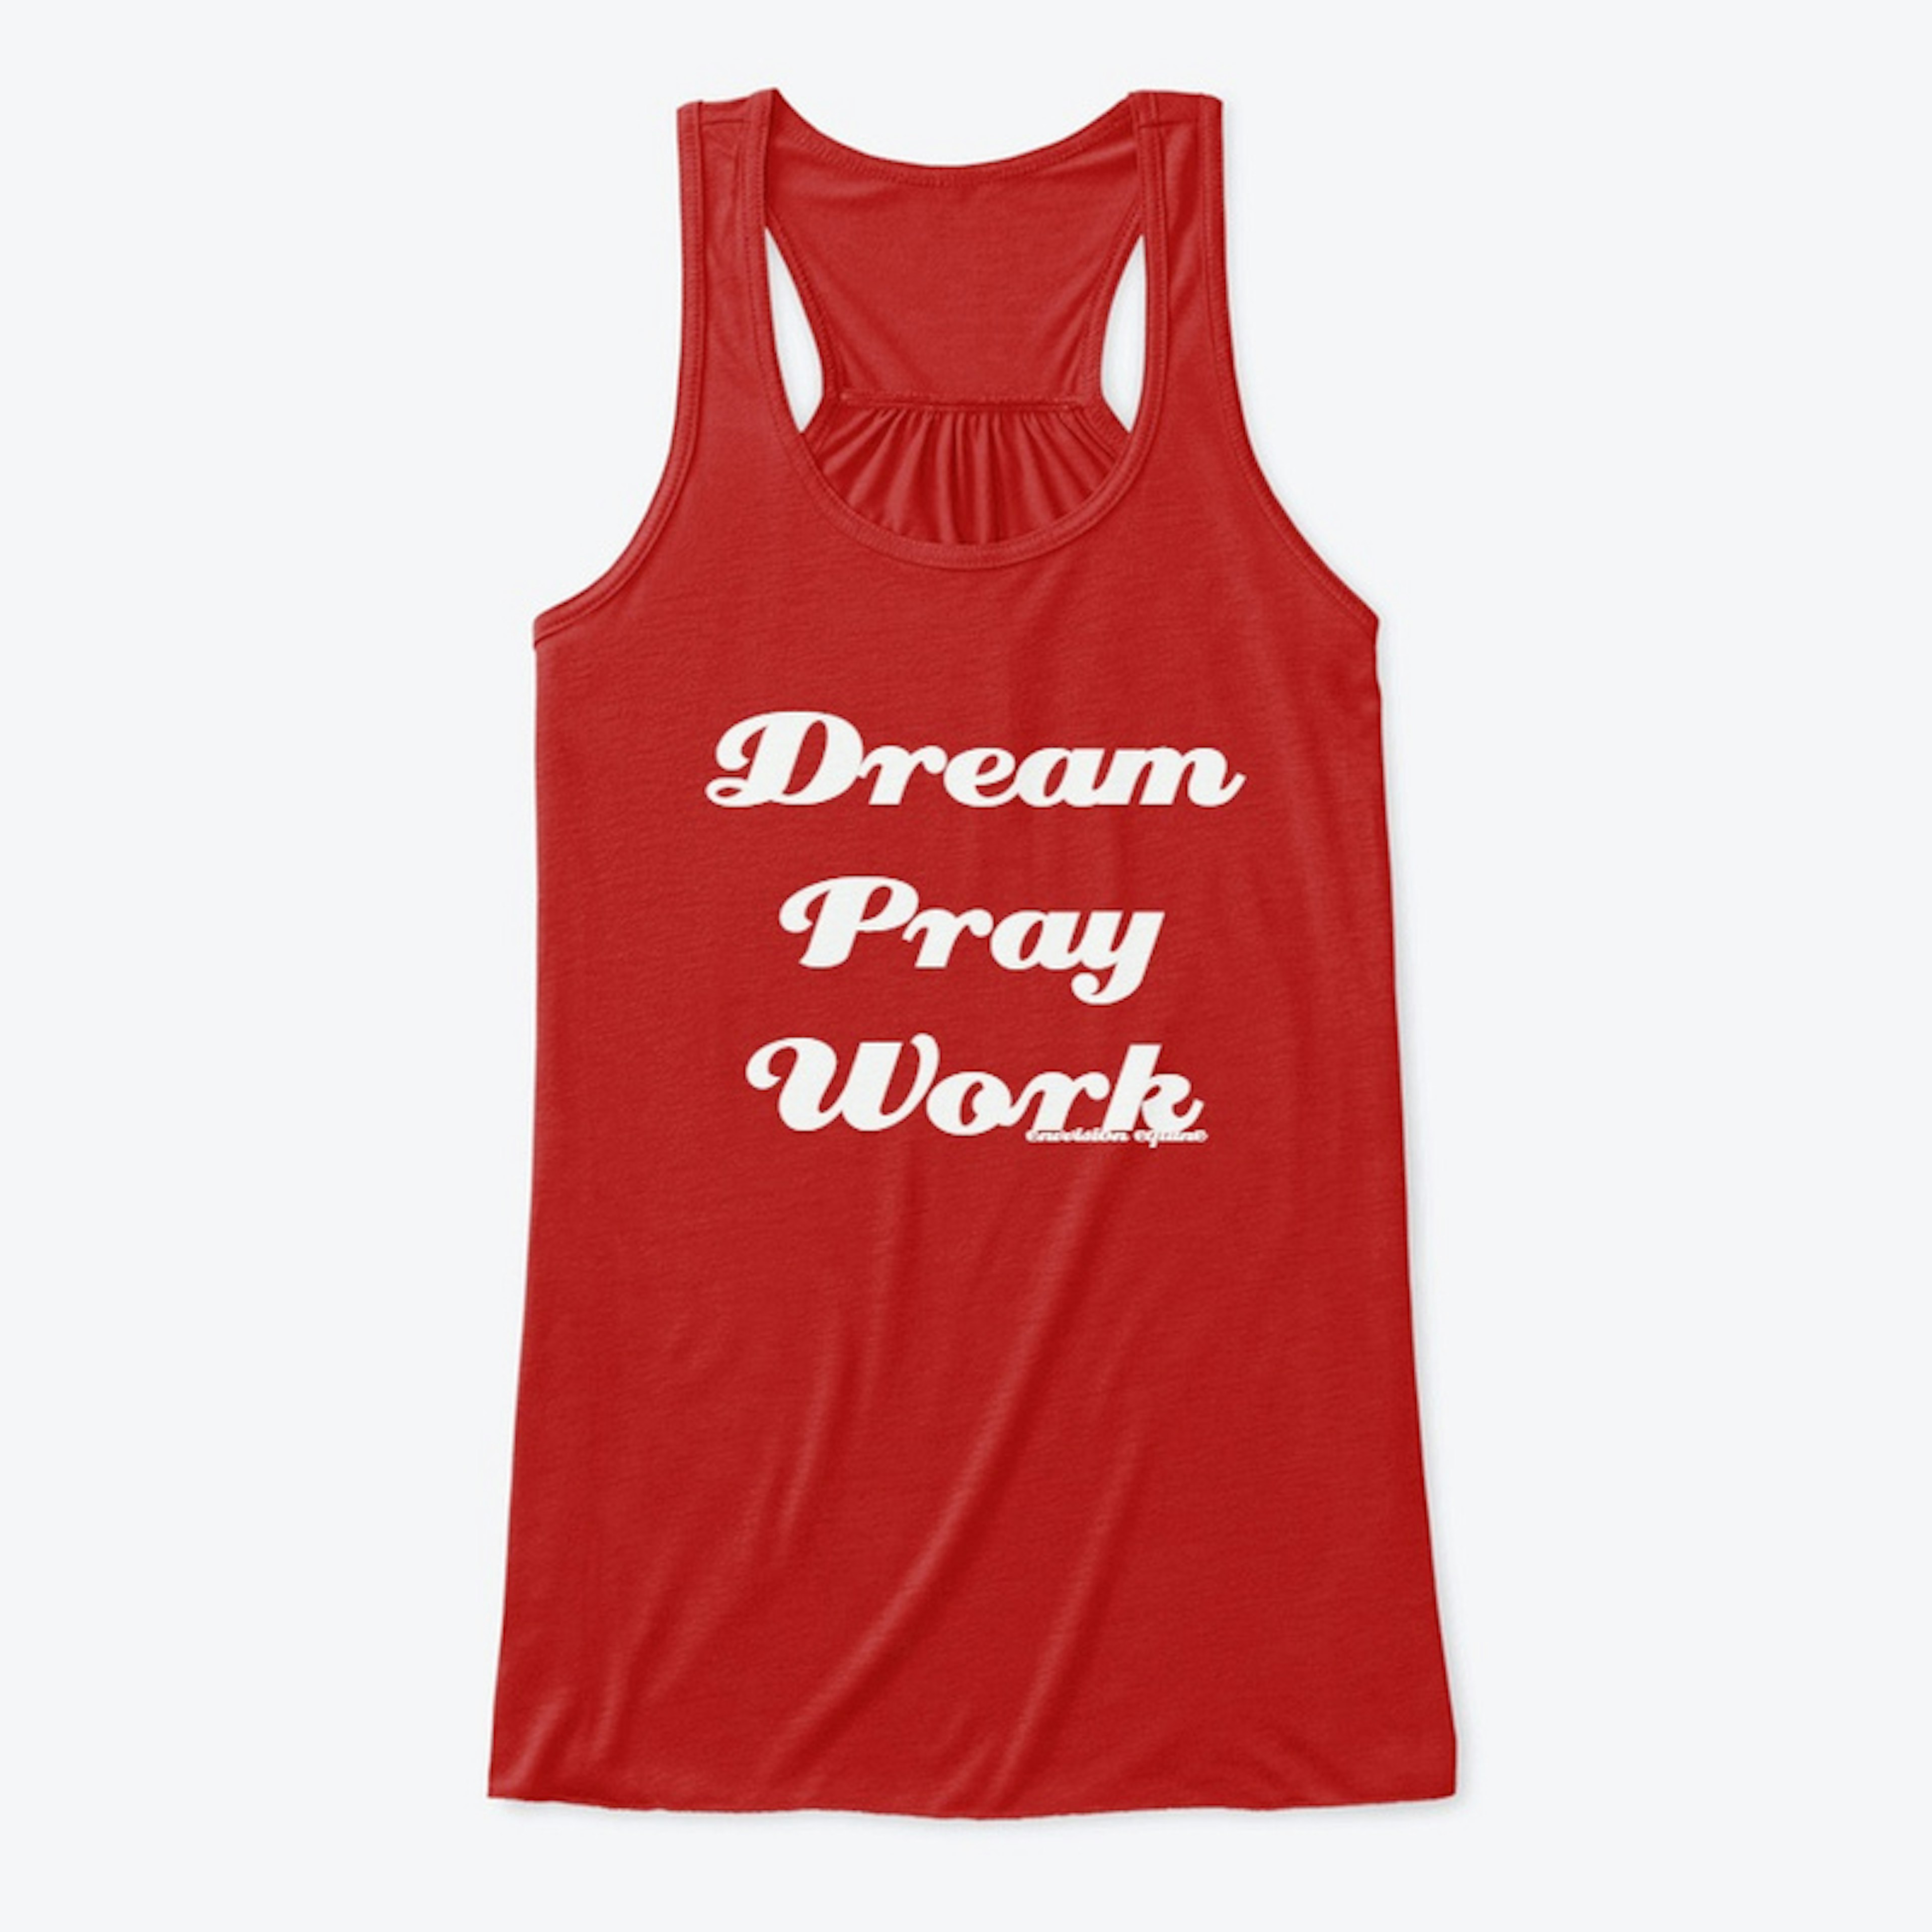 Dream, Pray, Work